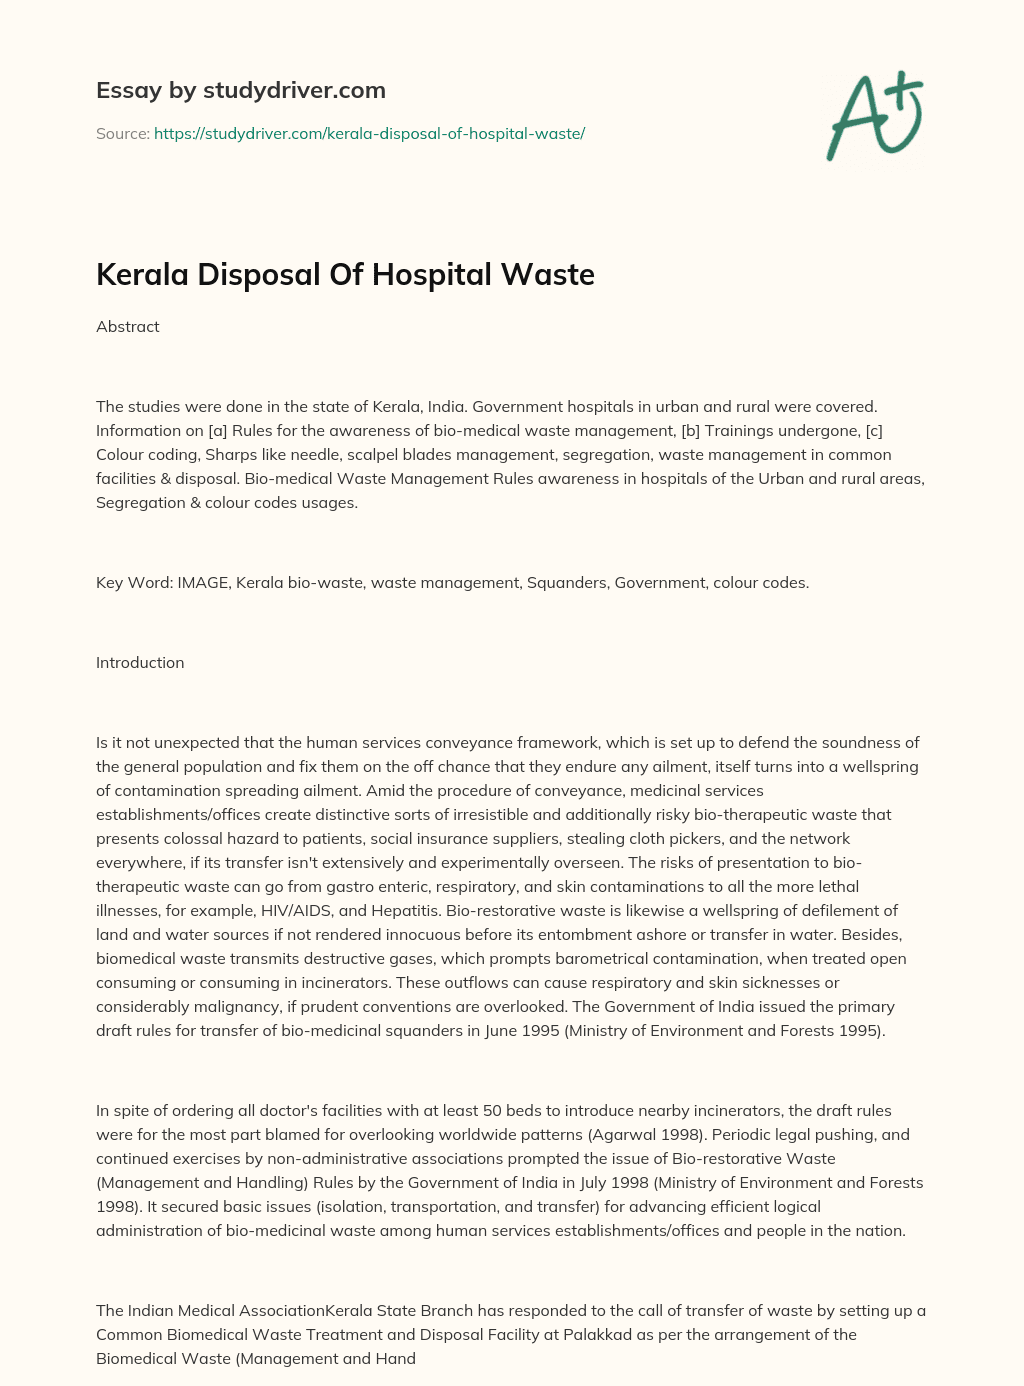 Kerala Disposal of Hospital Waste essay